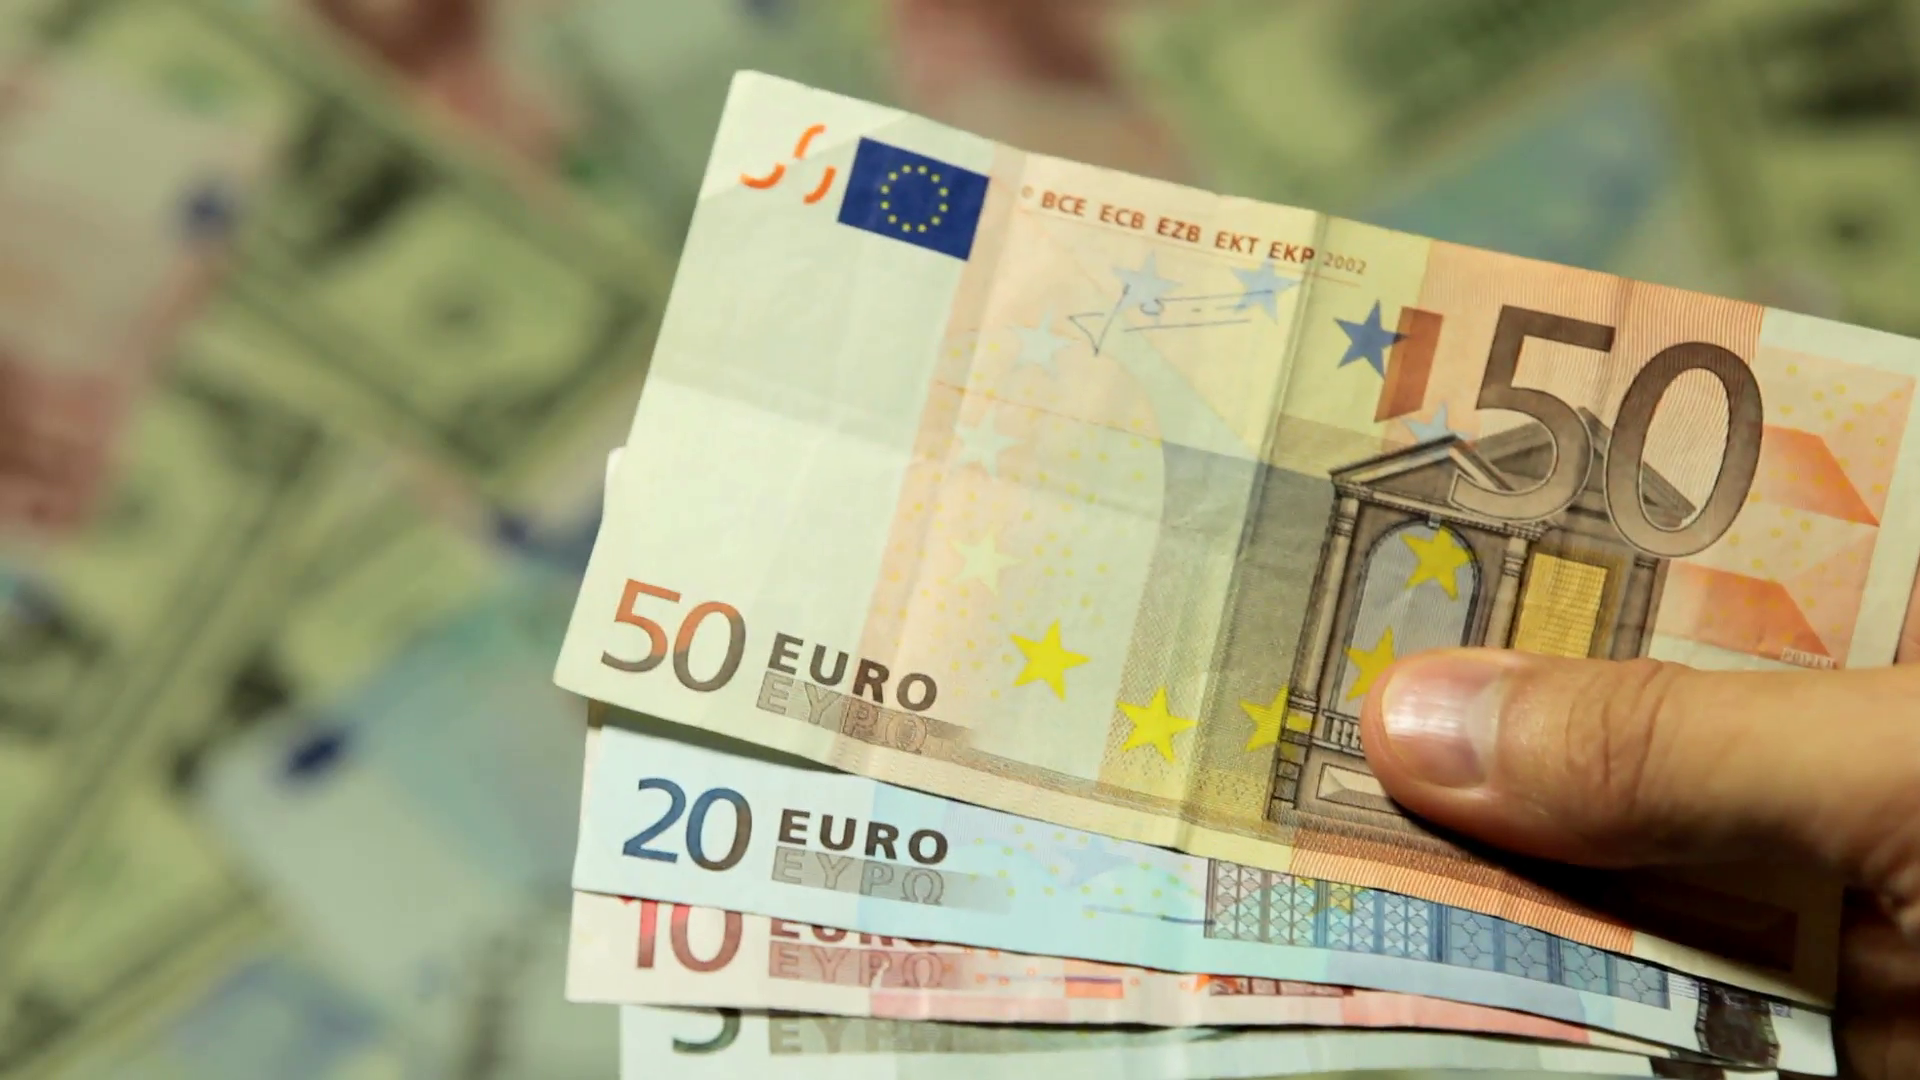 How Much EUR Euro To Get A Vietnam Visa